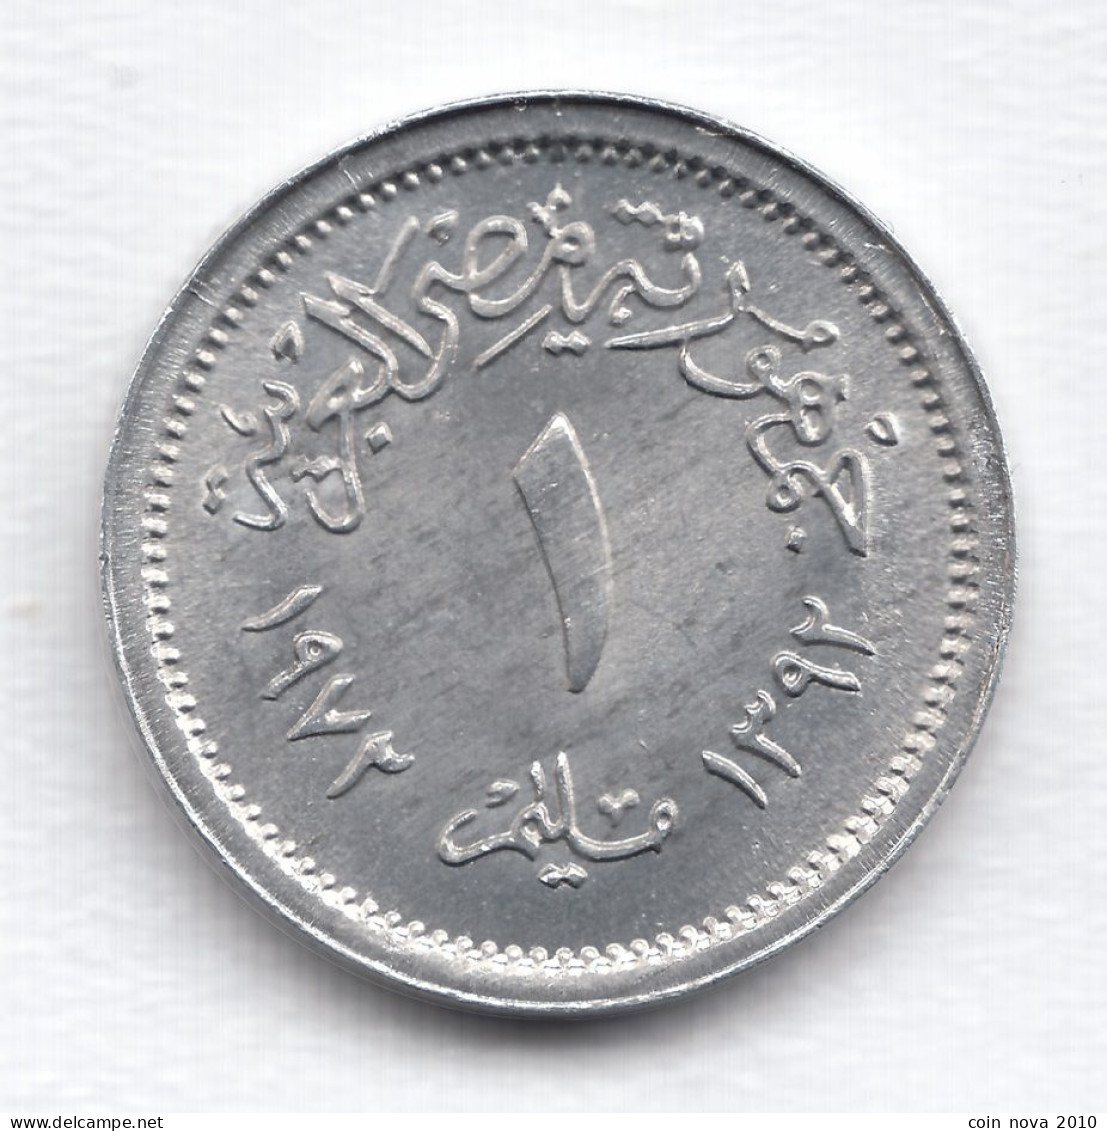 Egypt Ägypten 1 Millieme 1972 Aluminium 0.6 G 16 Mm KM A423 - Egitto